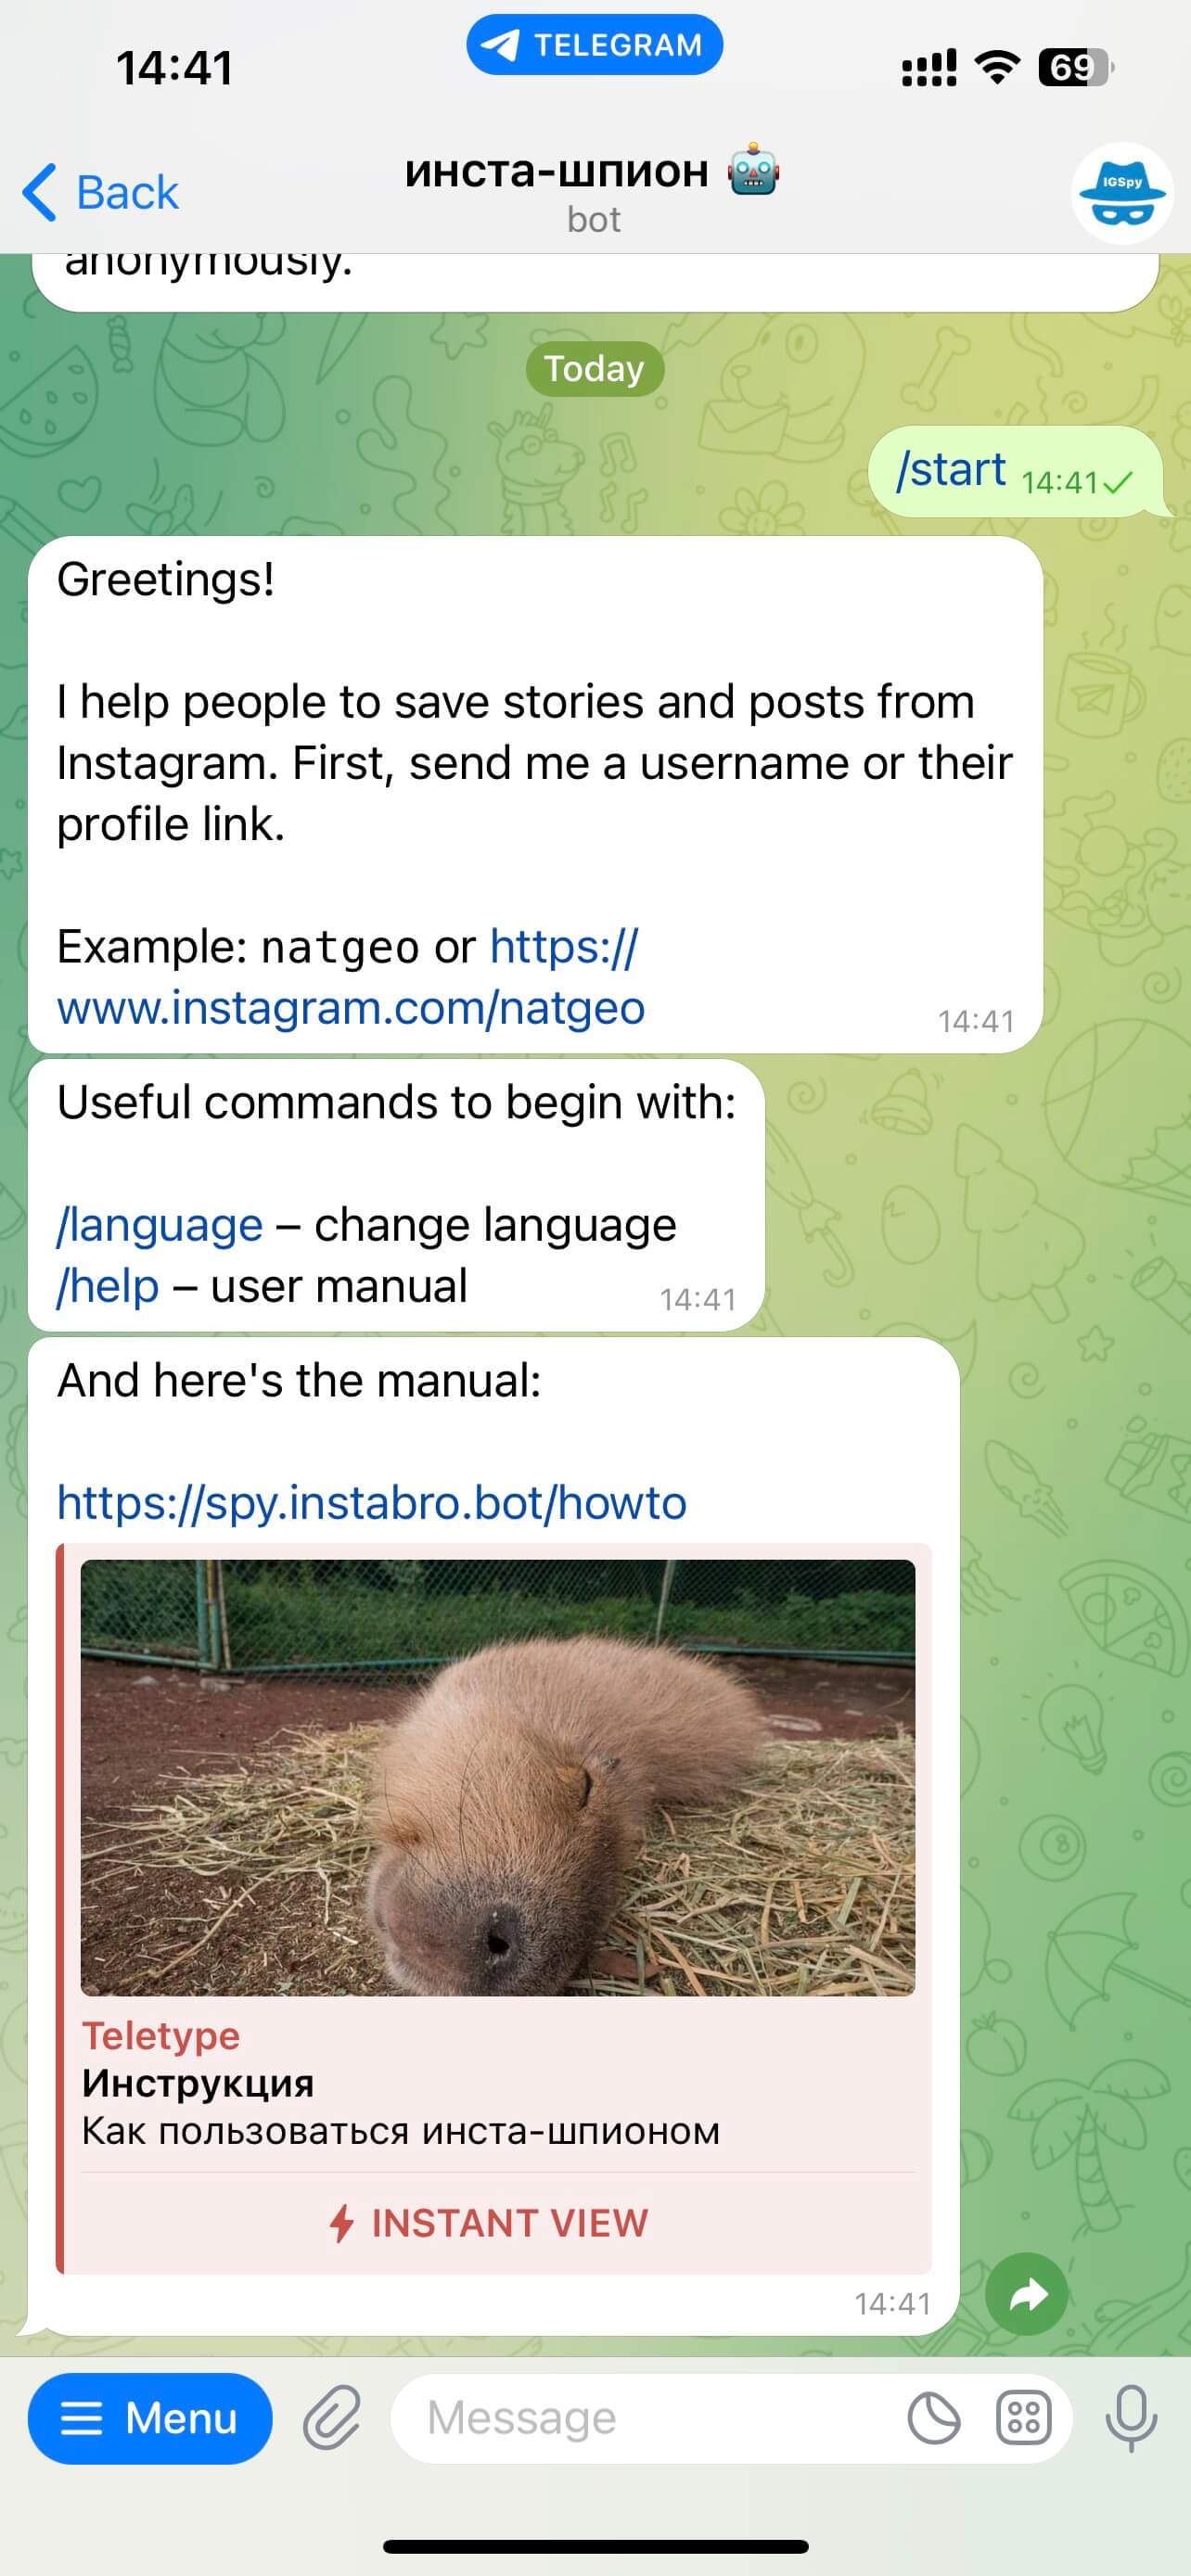 using telegram bots to watch story anonymously